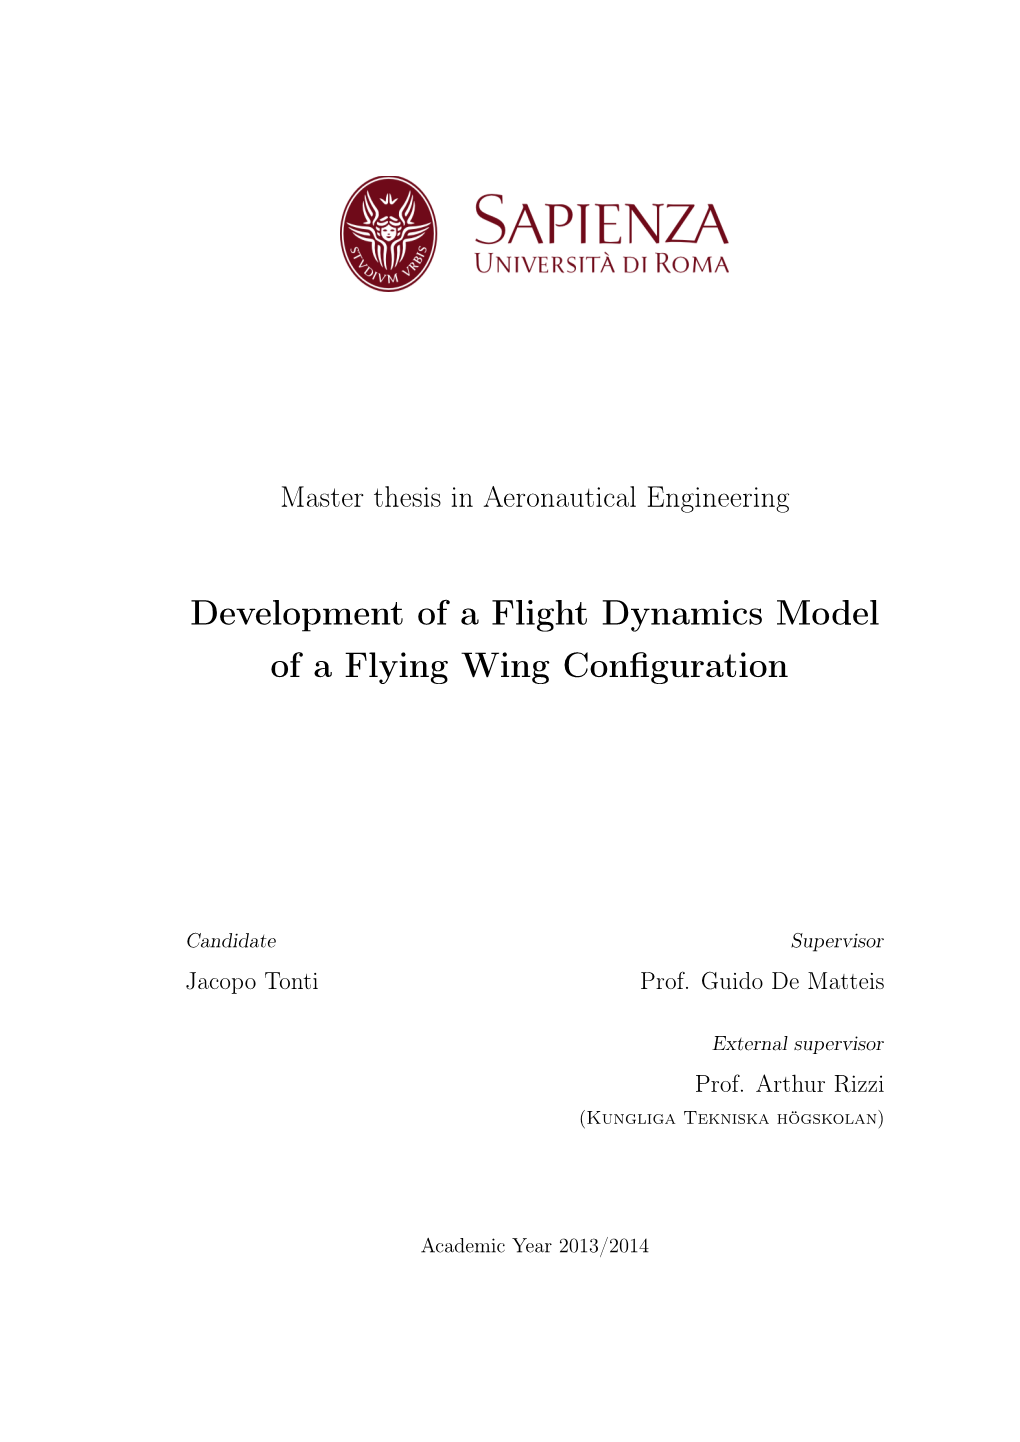 Development of a Flight Dynamics Model of a Flying Wing Configuration